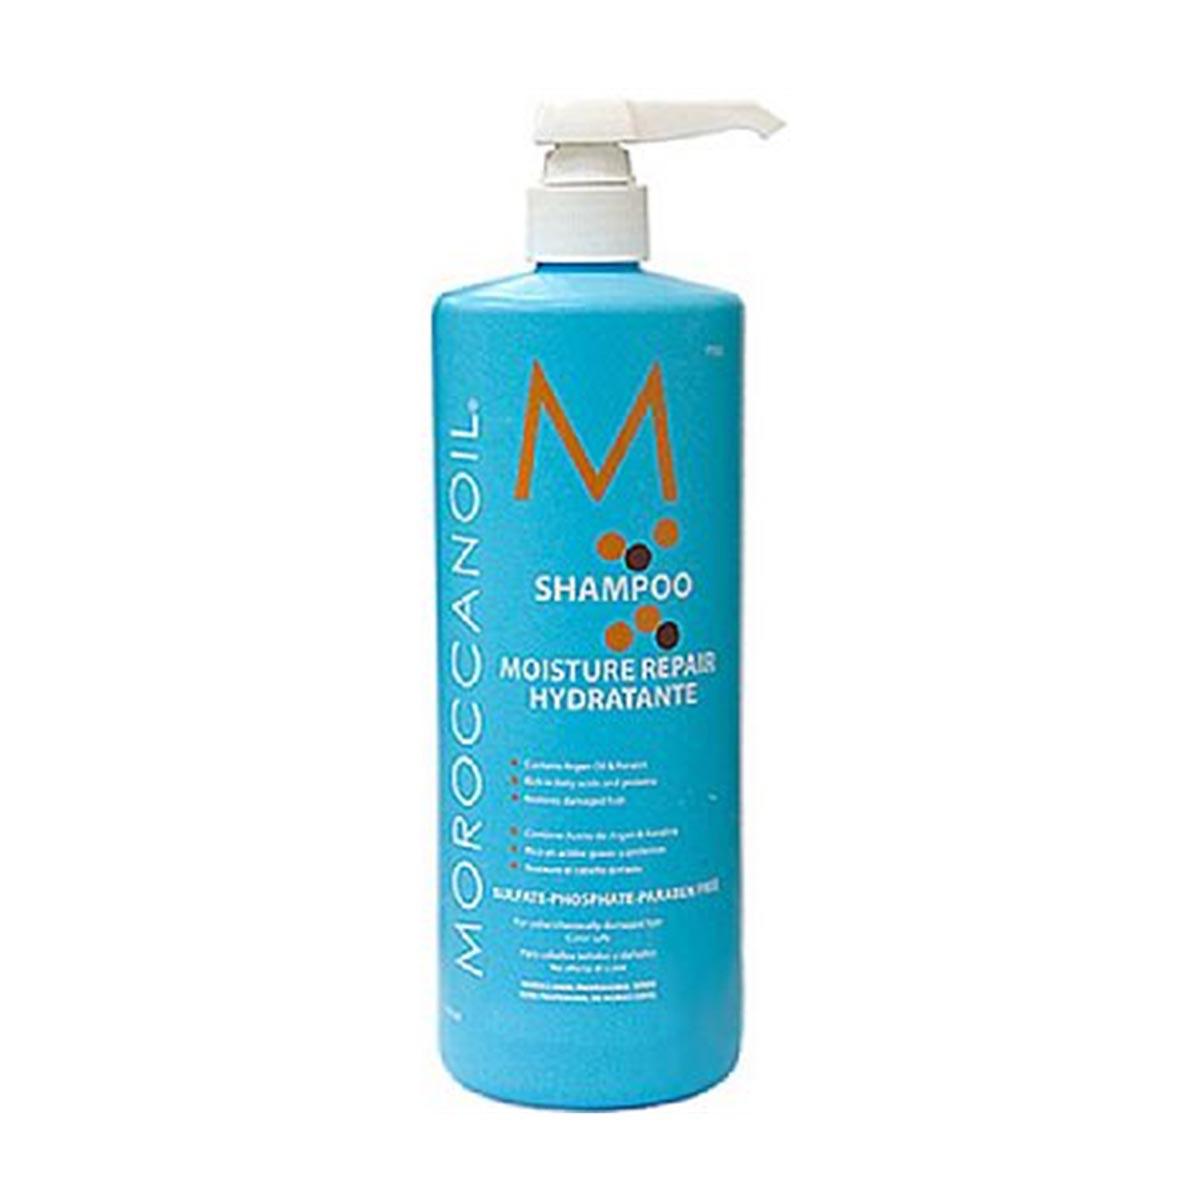 moroccanoil-shampoo-moisture-repair-hydratante-1000ml